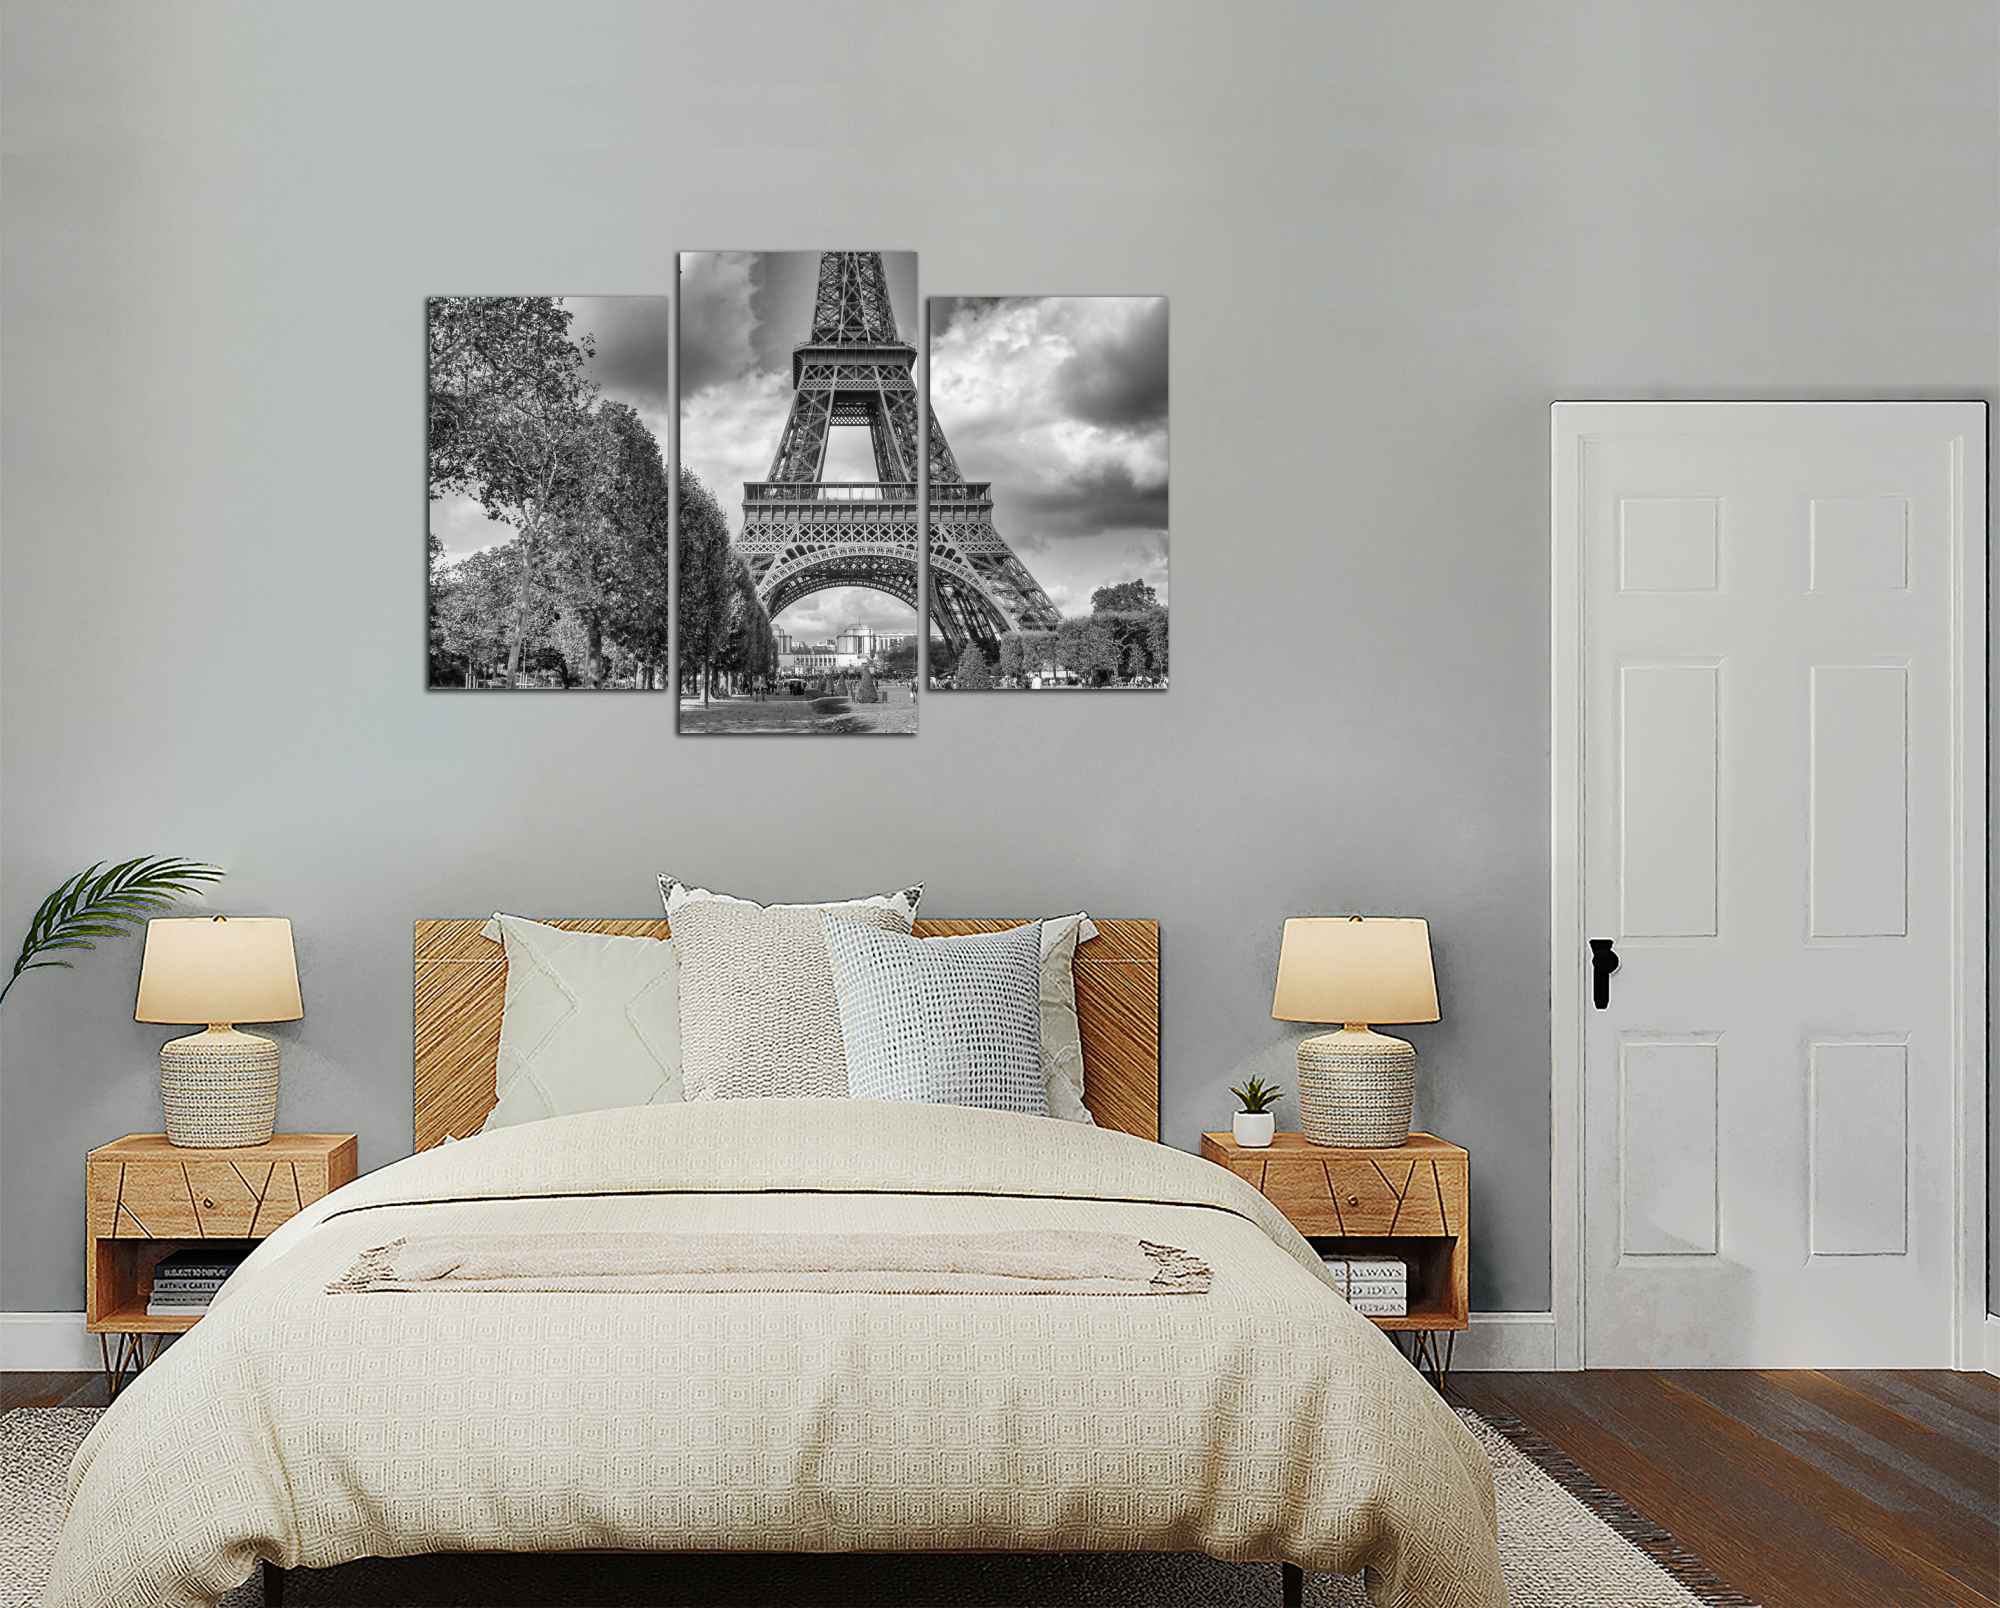 Obdelníkový obraz Eiffelovka a park